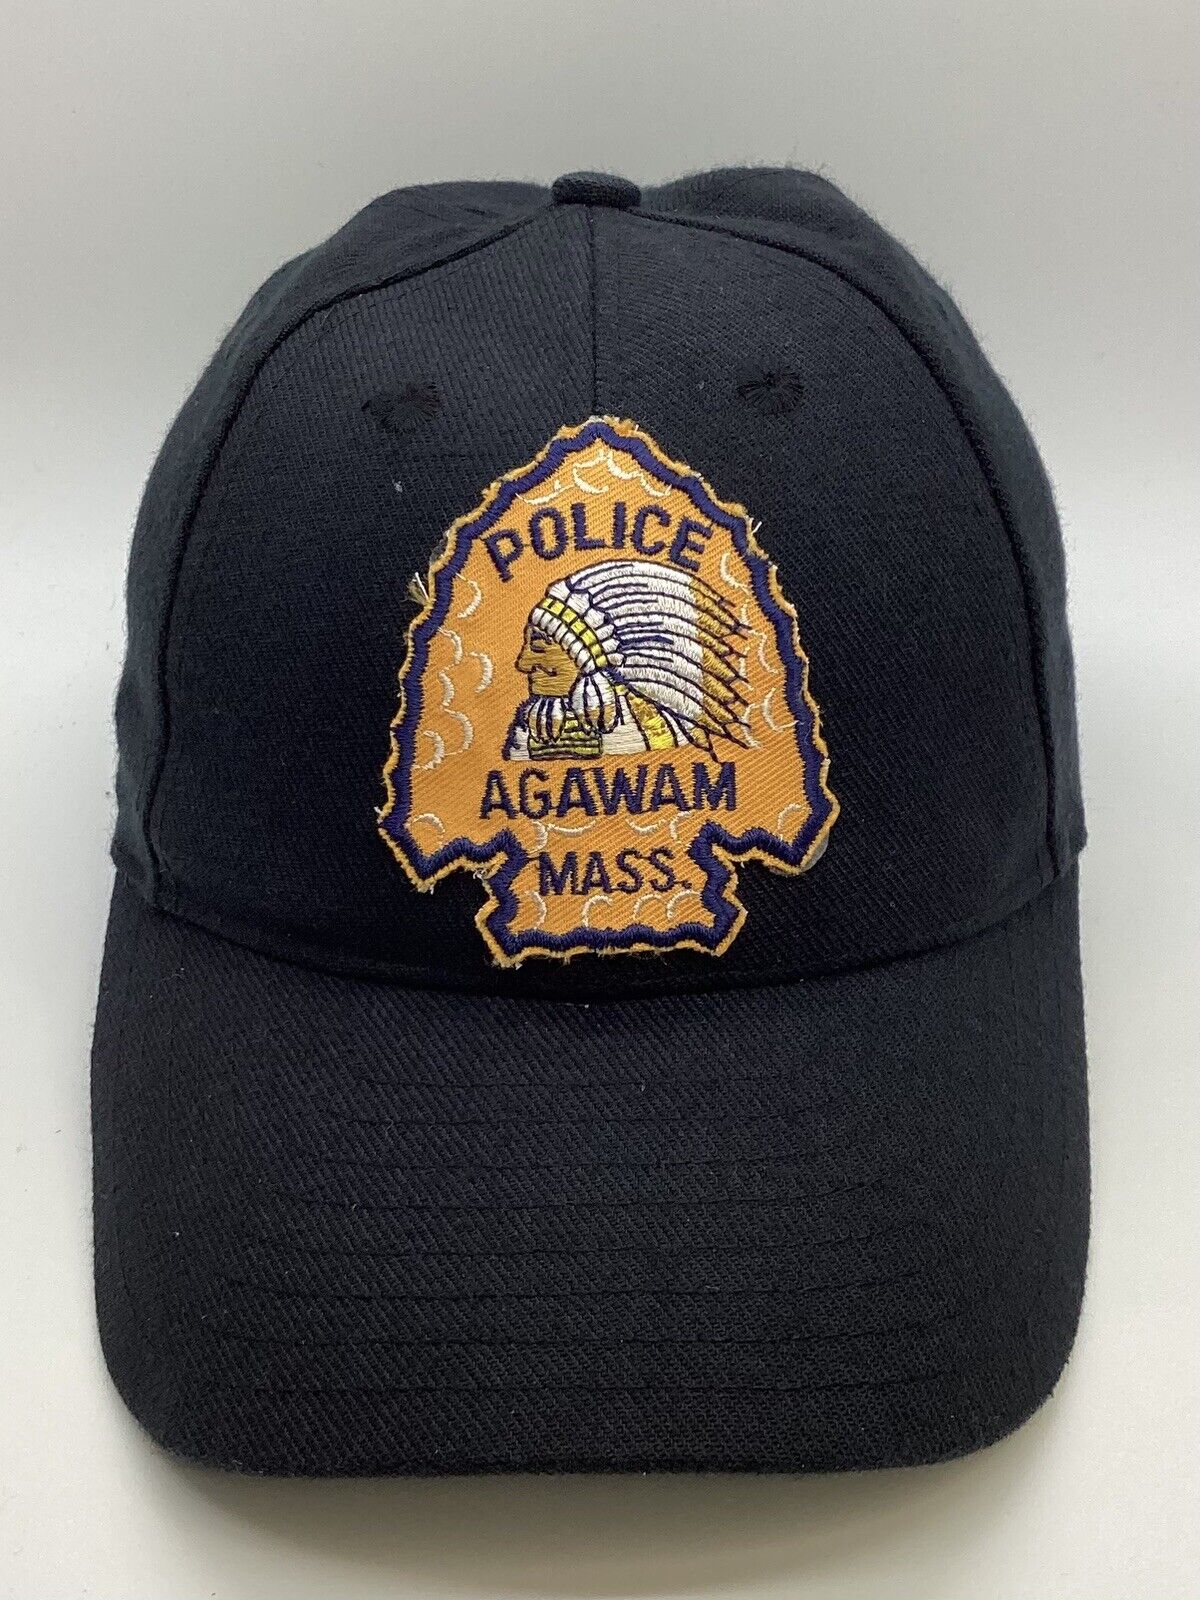 Agawam Mass Police Dept Cap Hat Women S-M Youth M-L New Era Wool Acrylic Black